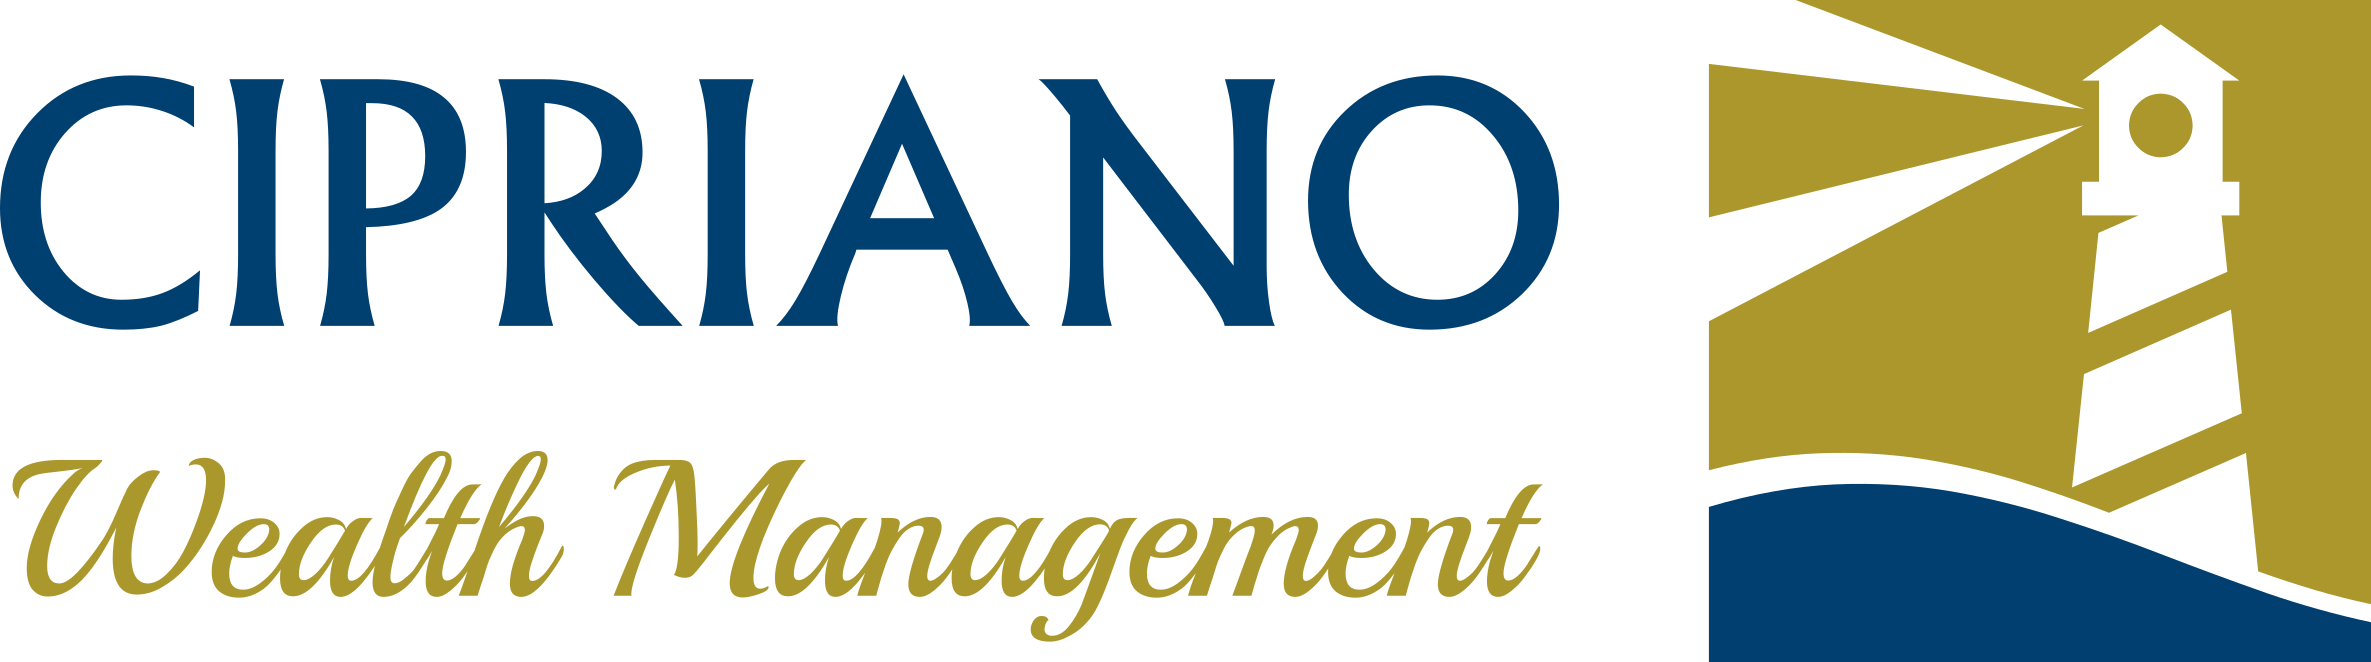 Cipriano Wealth Management, LLC